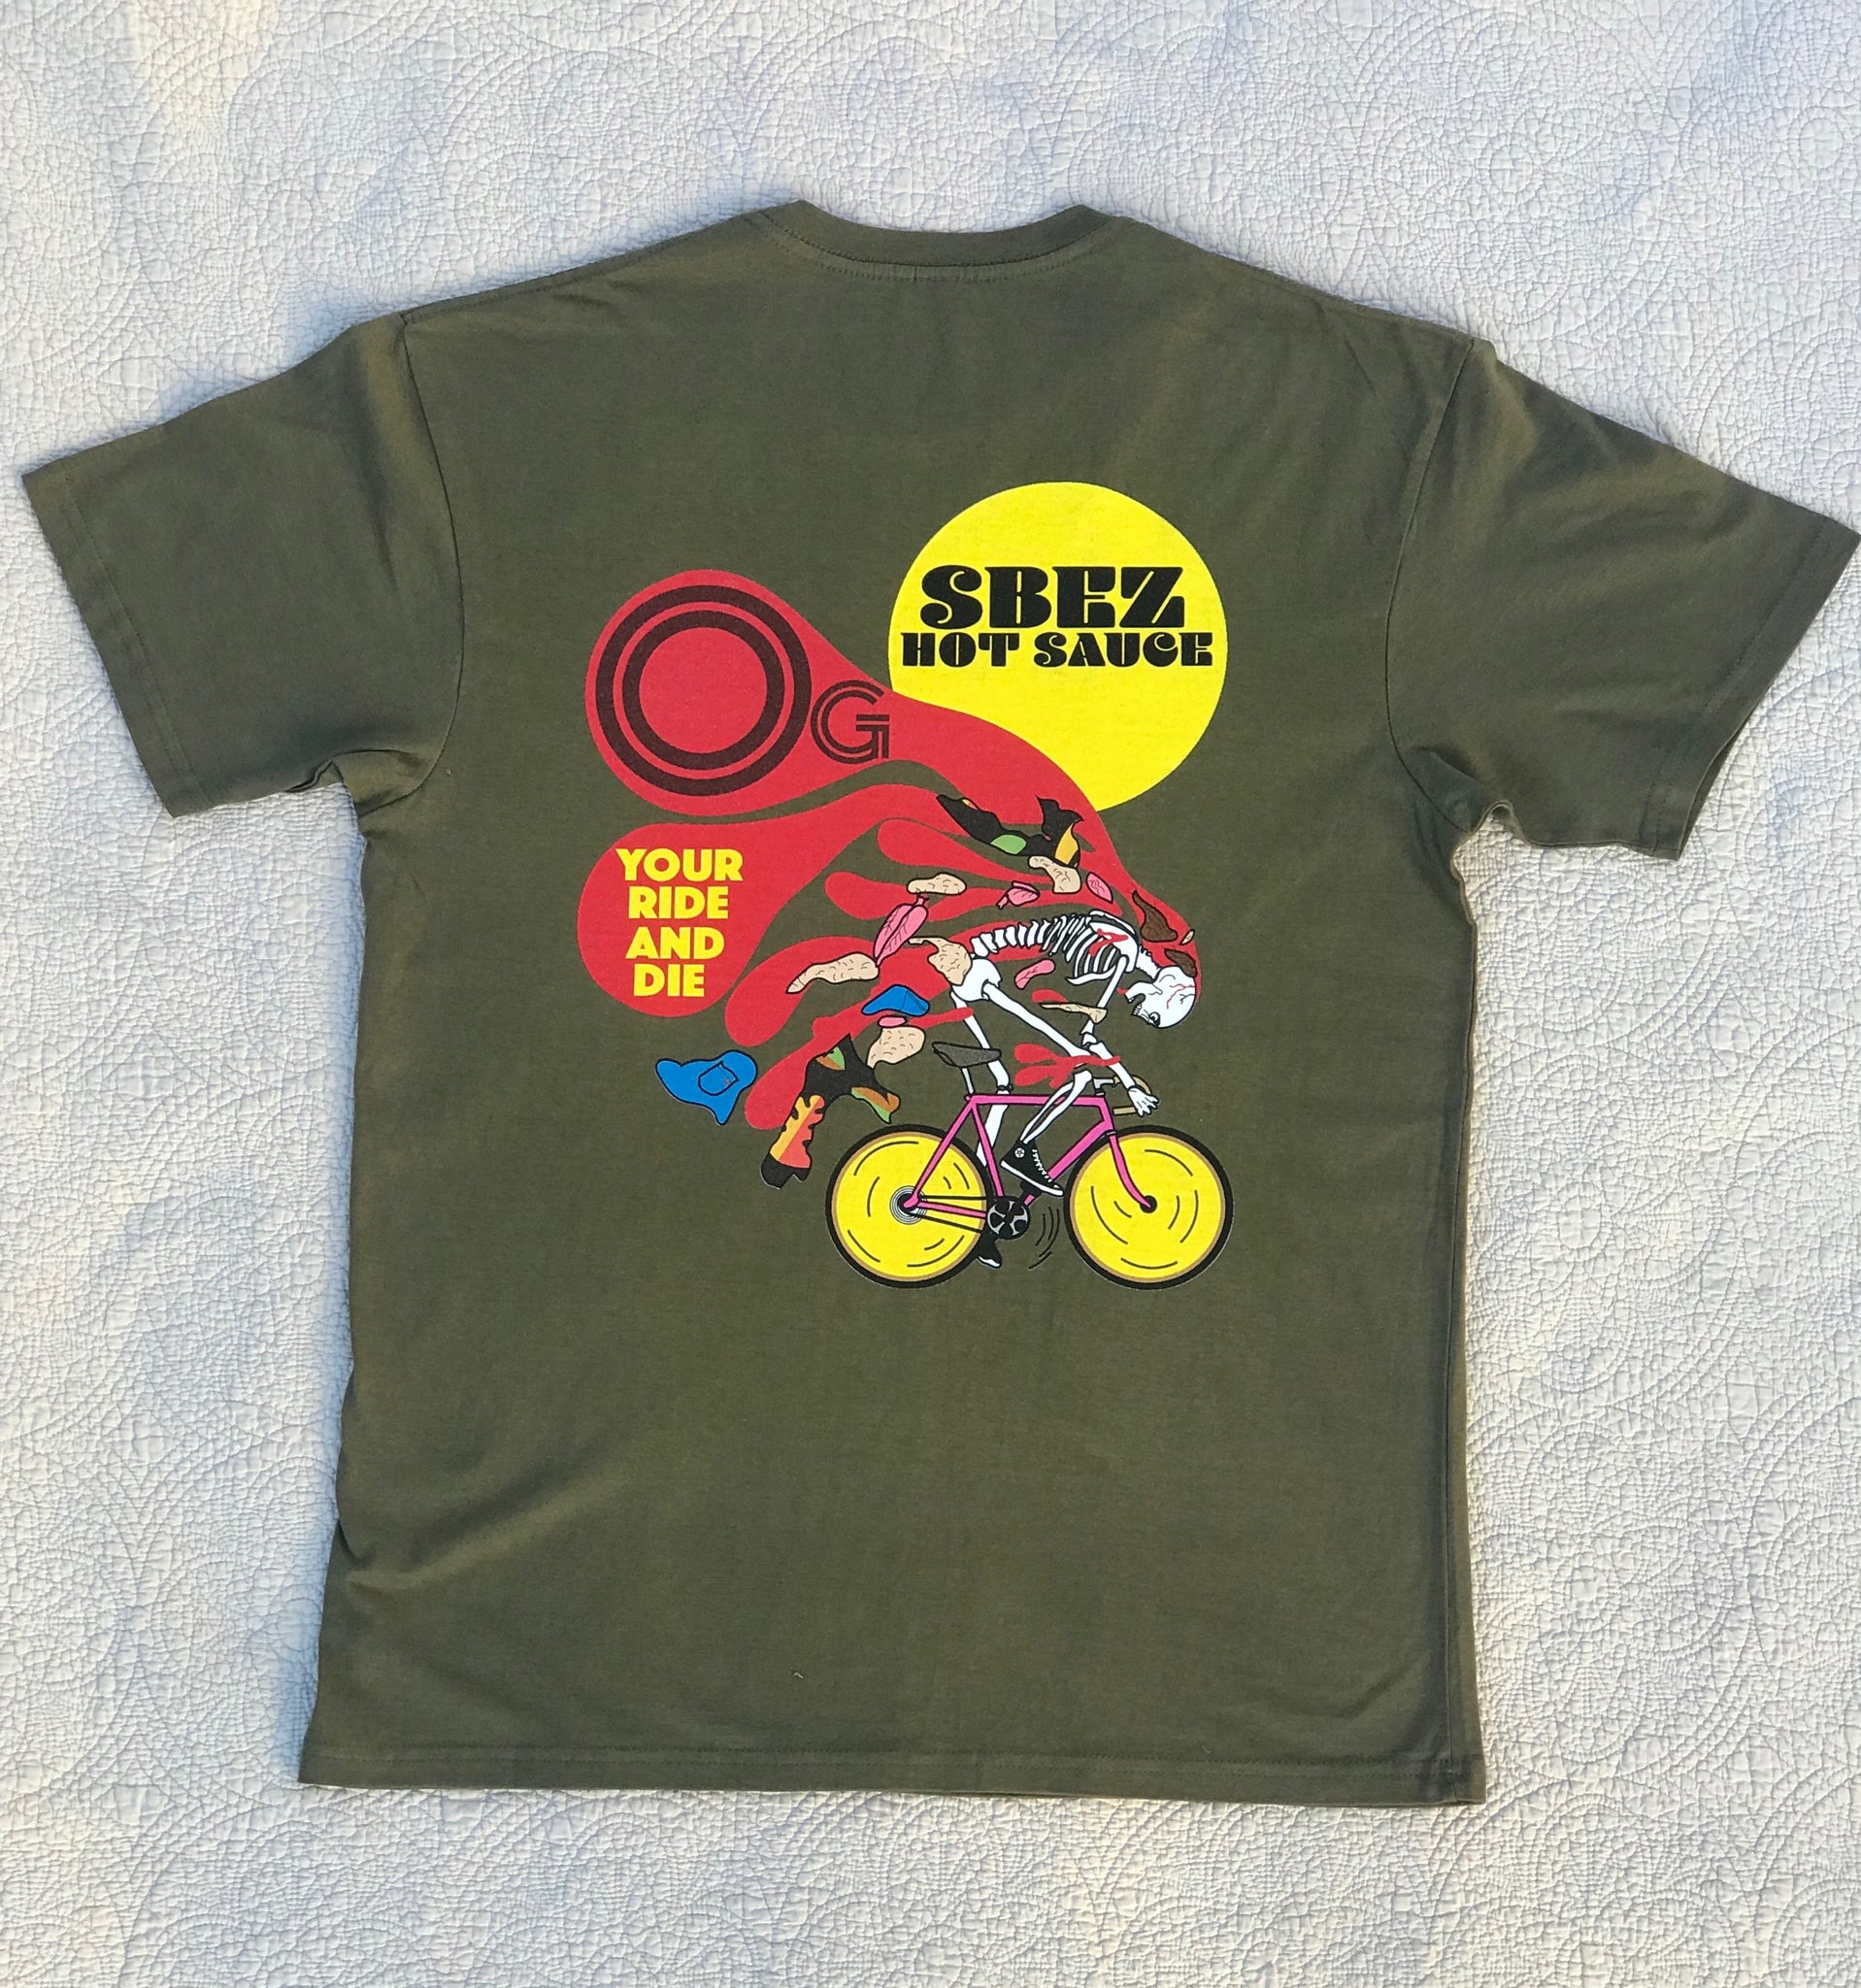 Sbez OG Ride and Die T-shirt